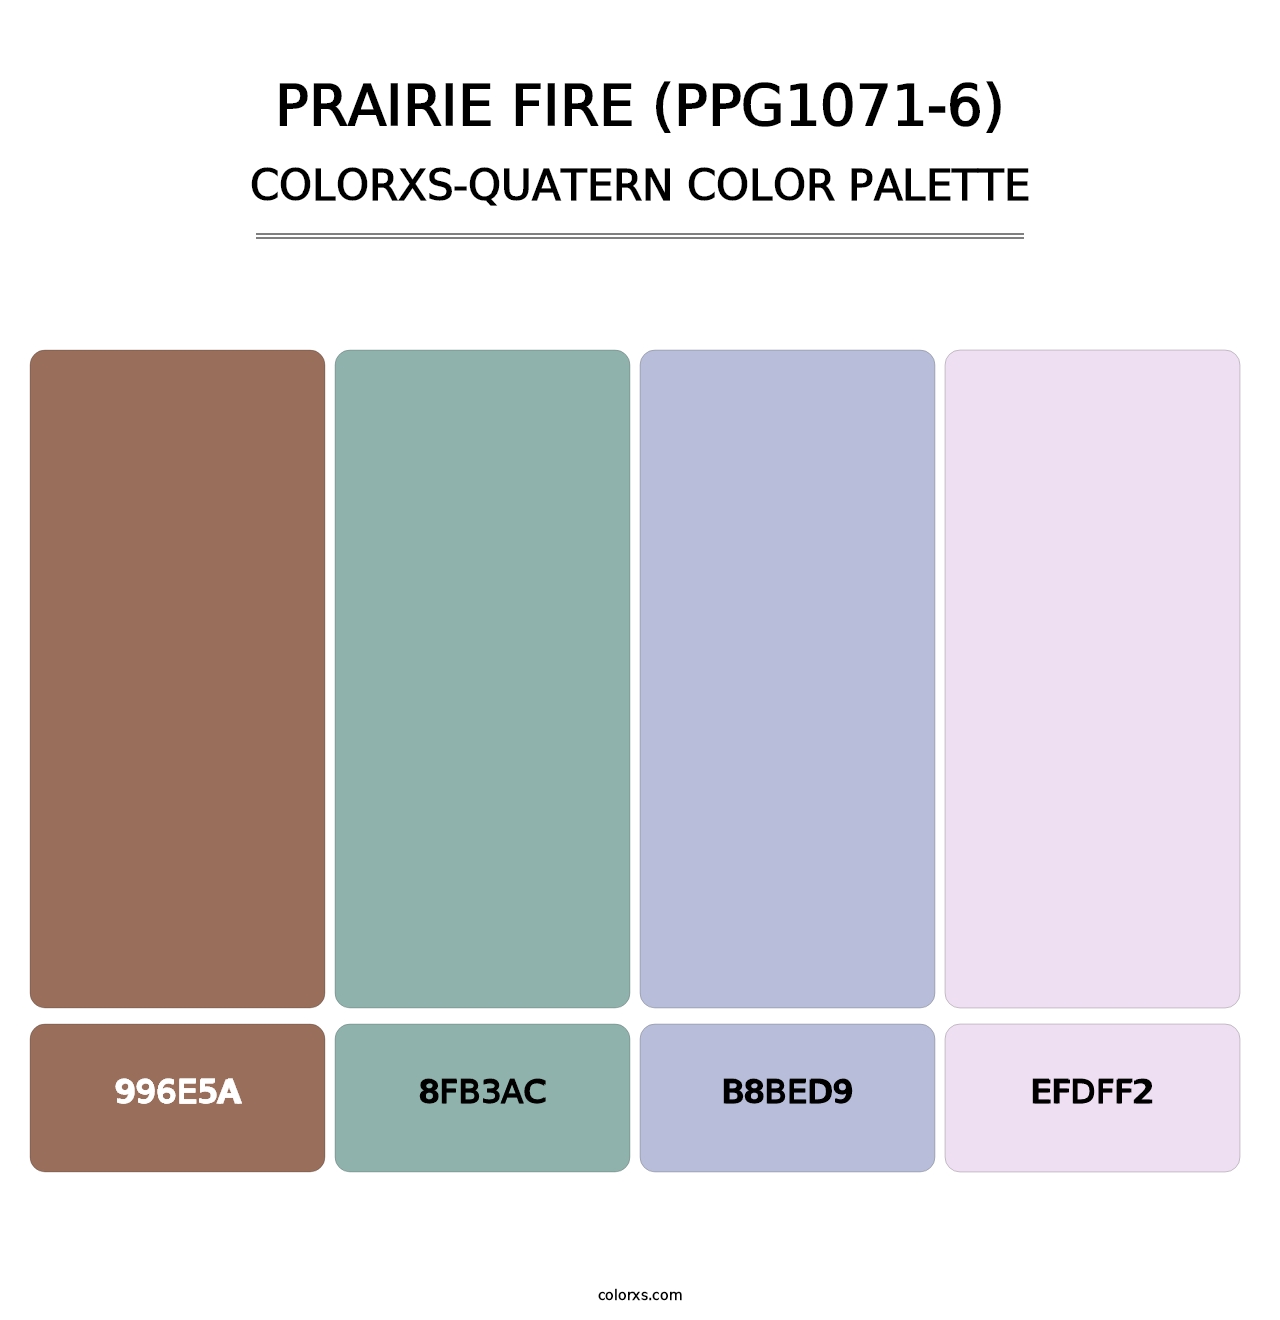 Prairie Fire (PPG1071-6) - Colorxs Quatern Palette